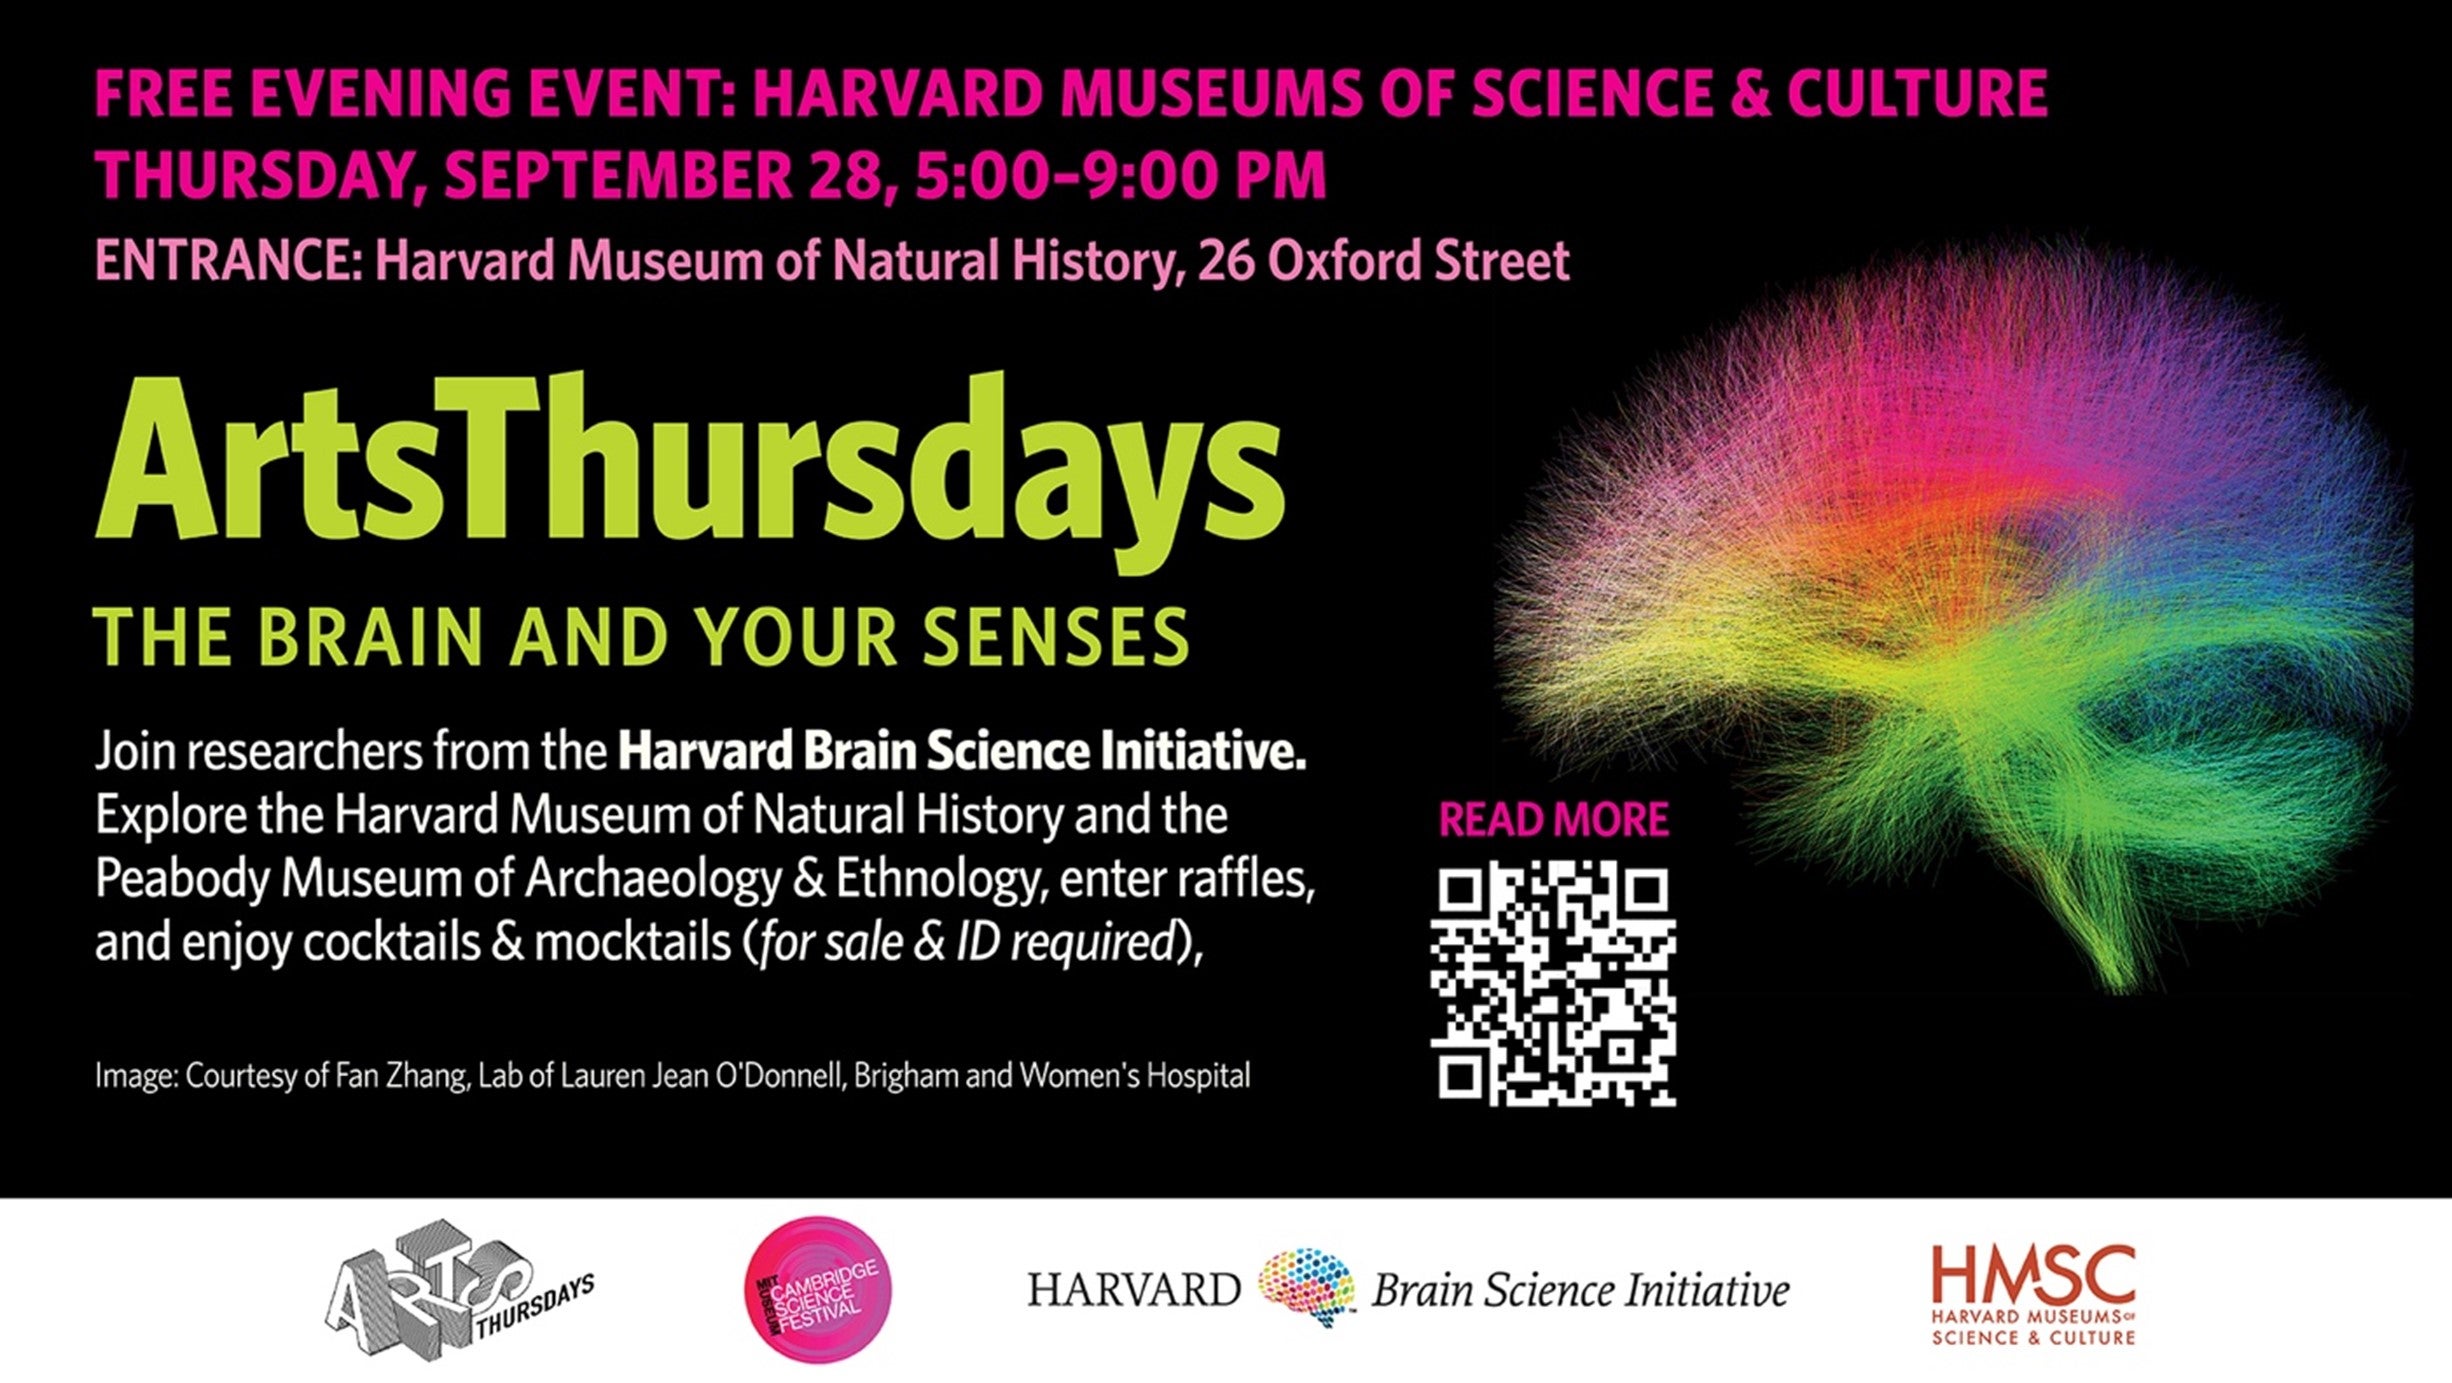 event poster header for ArtsThursdays event